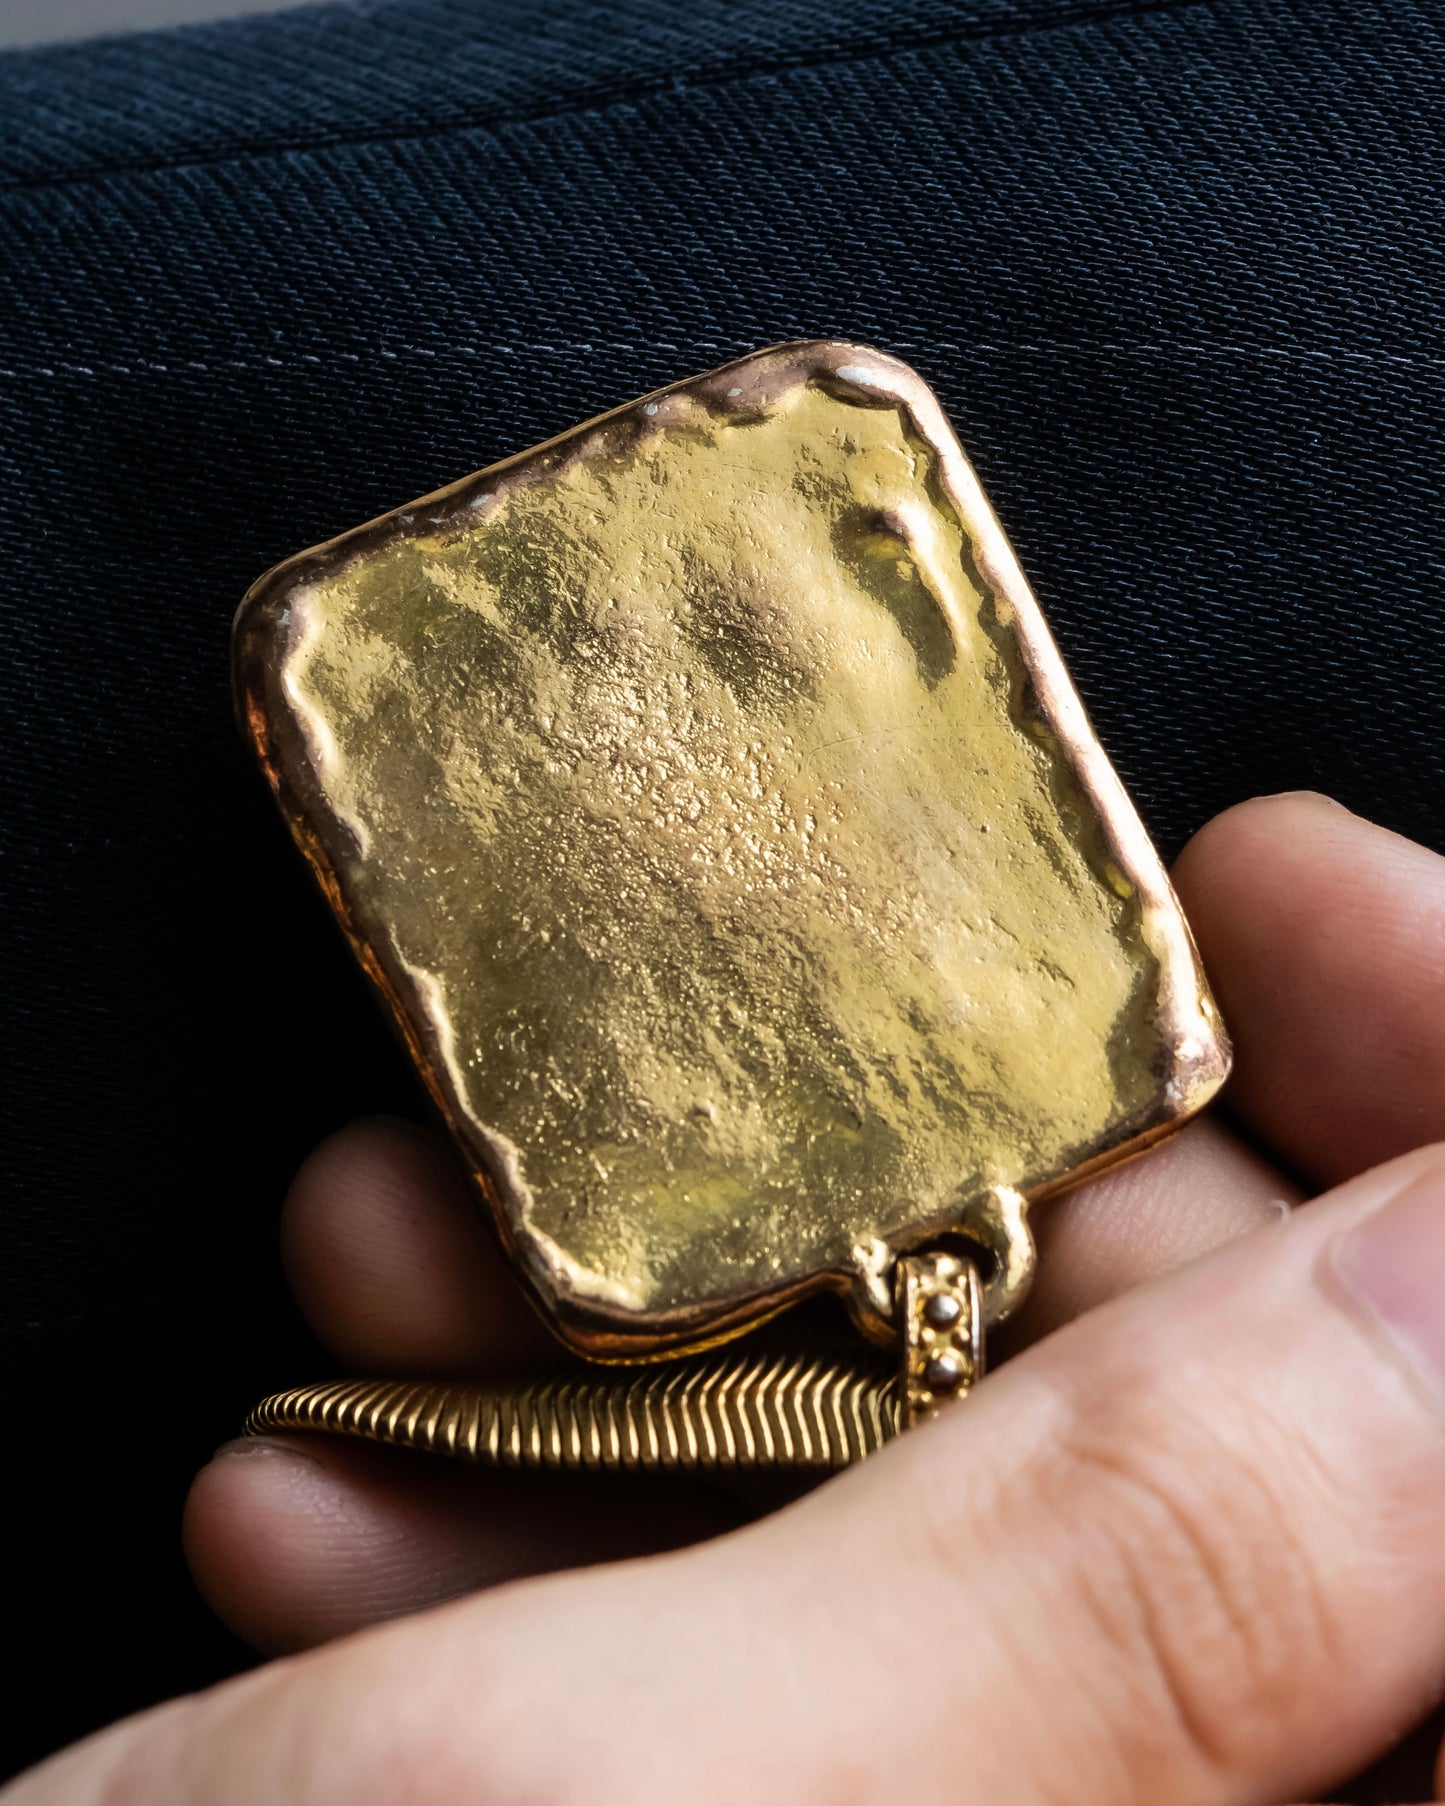 “Yves saint laurent” YSL logo plate gold necklace